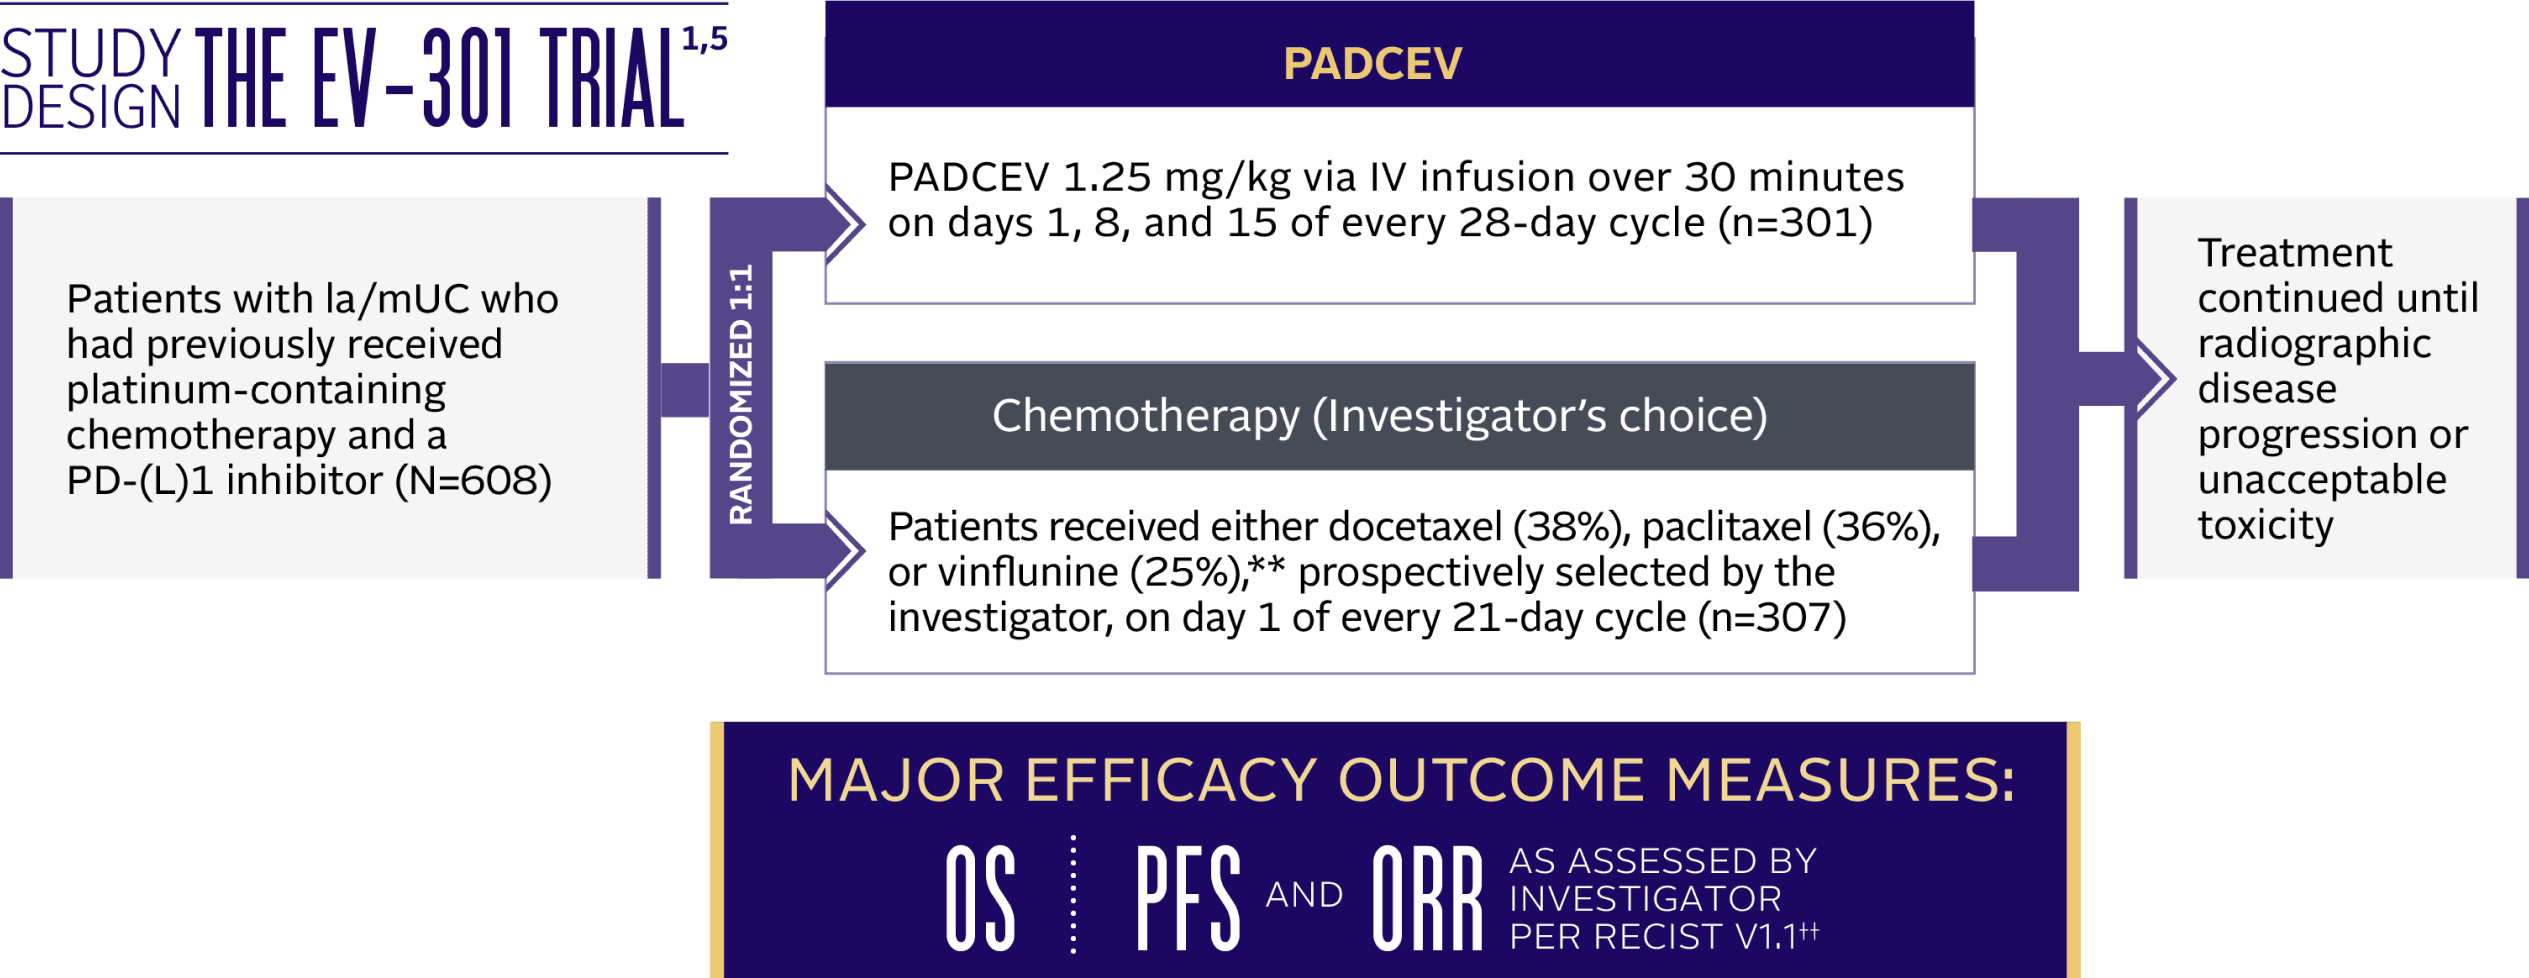 PADCEV EV-301 trial study design.